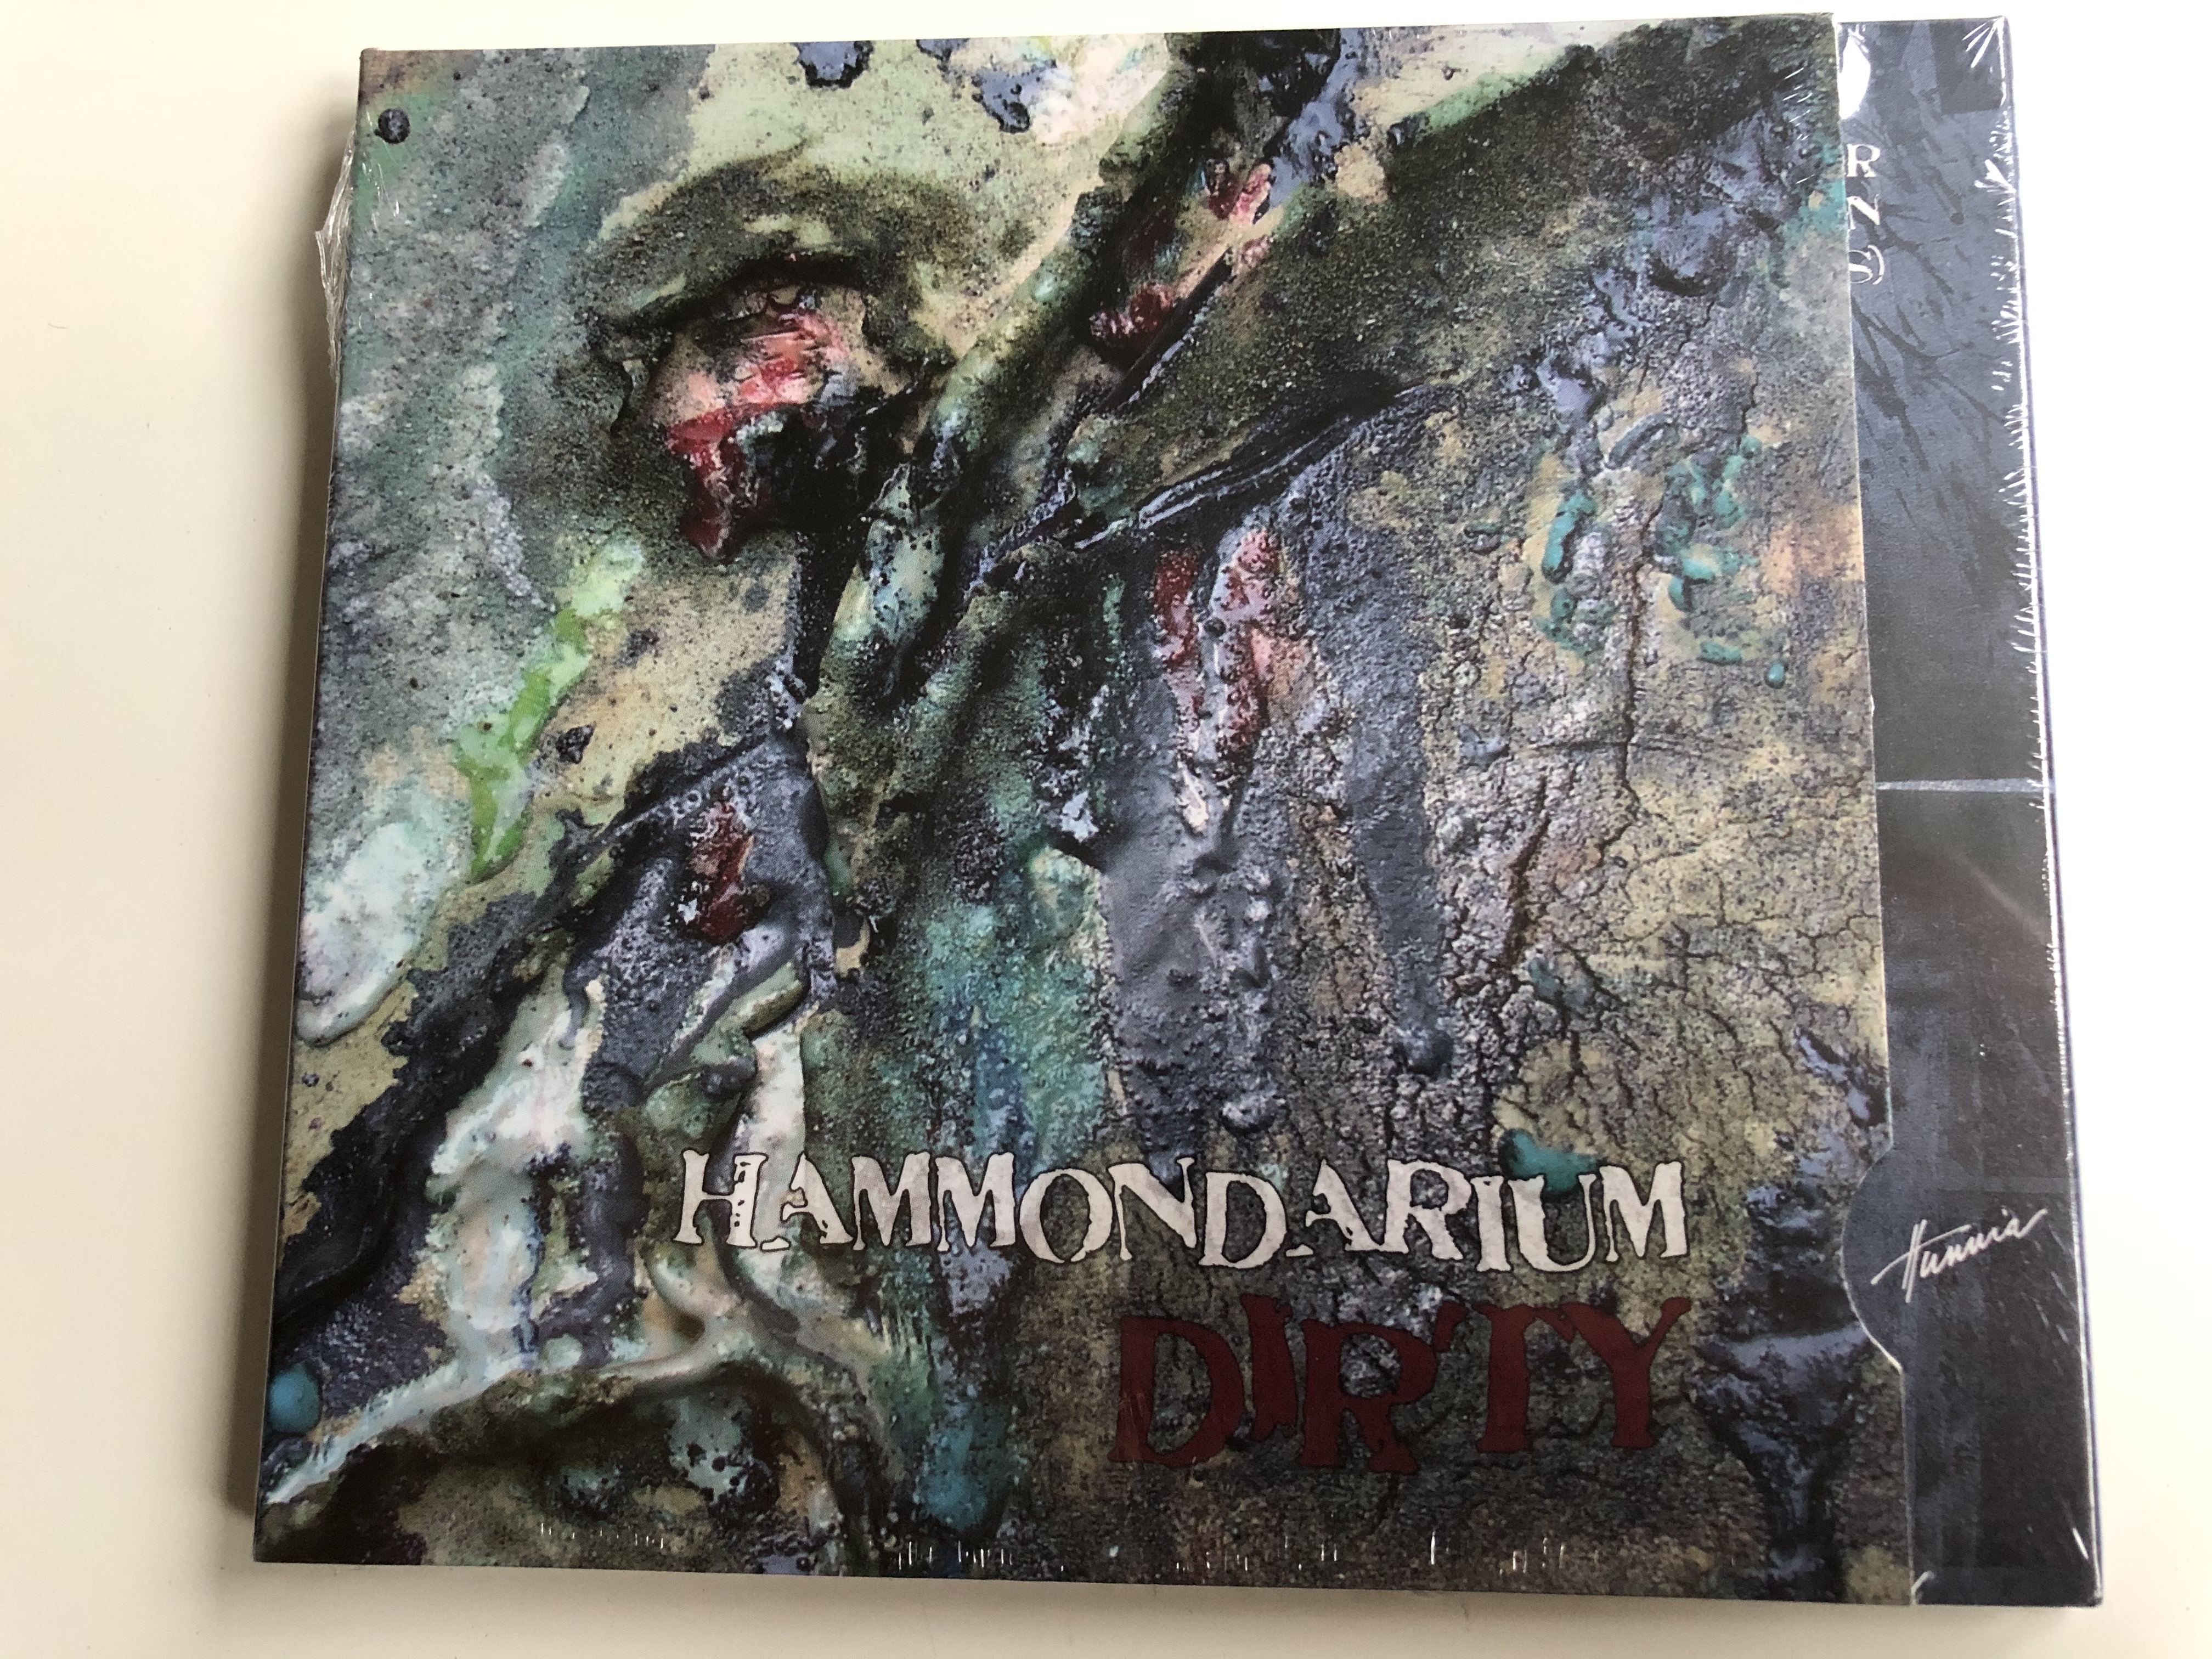 hammondarium-dirty-hunnia-records-film-production-audio-cd-2010-hrcd-1010-1-.jpg